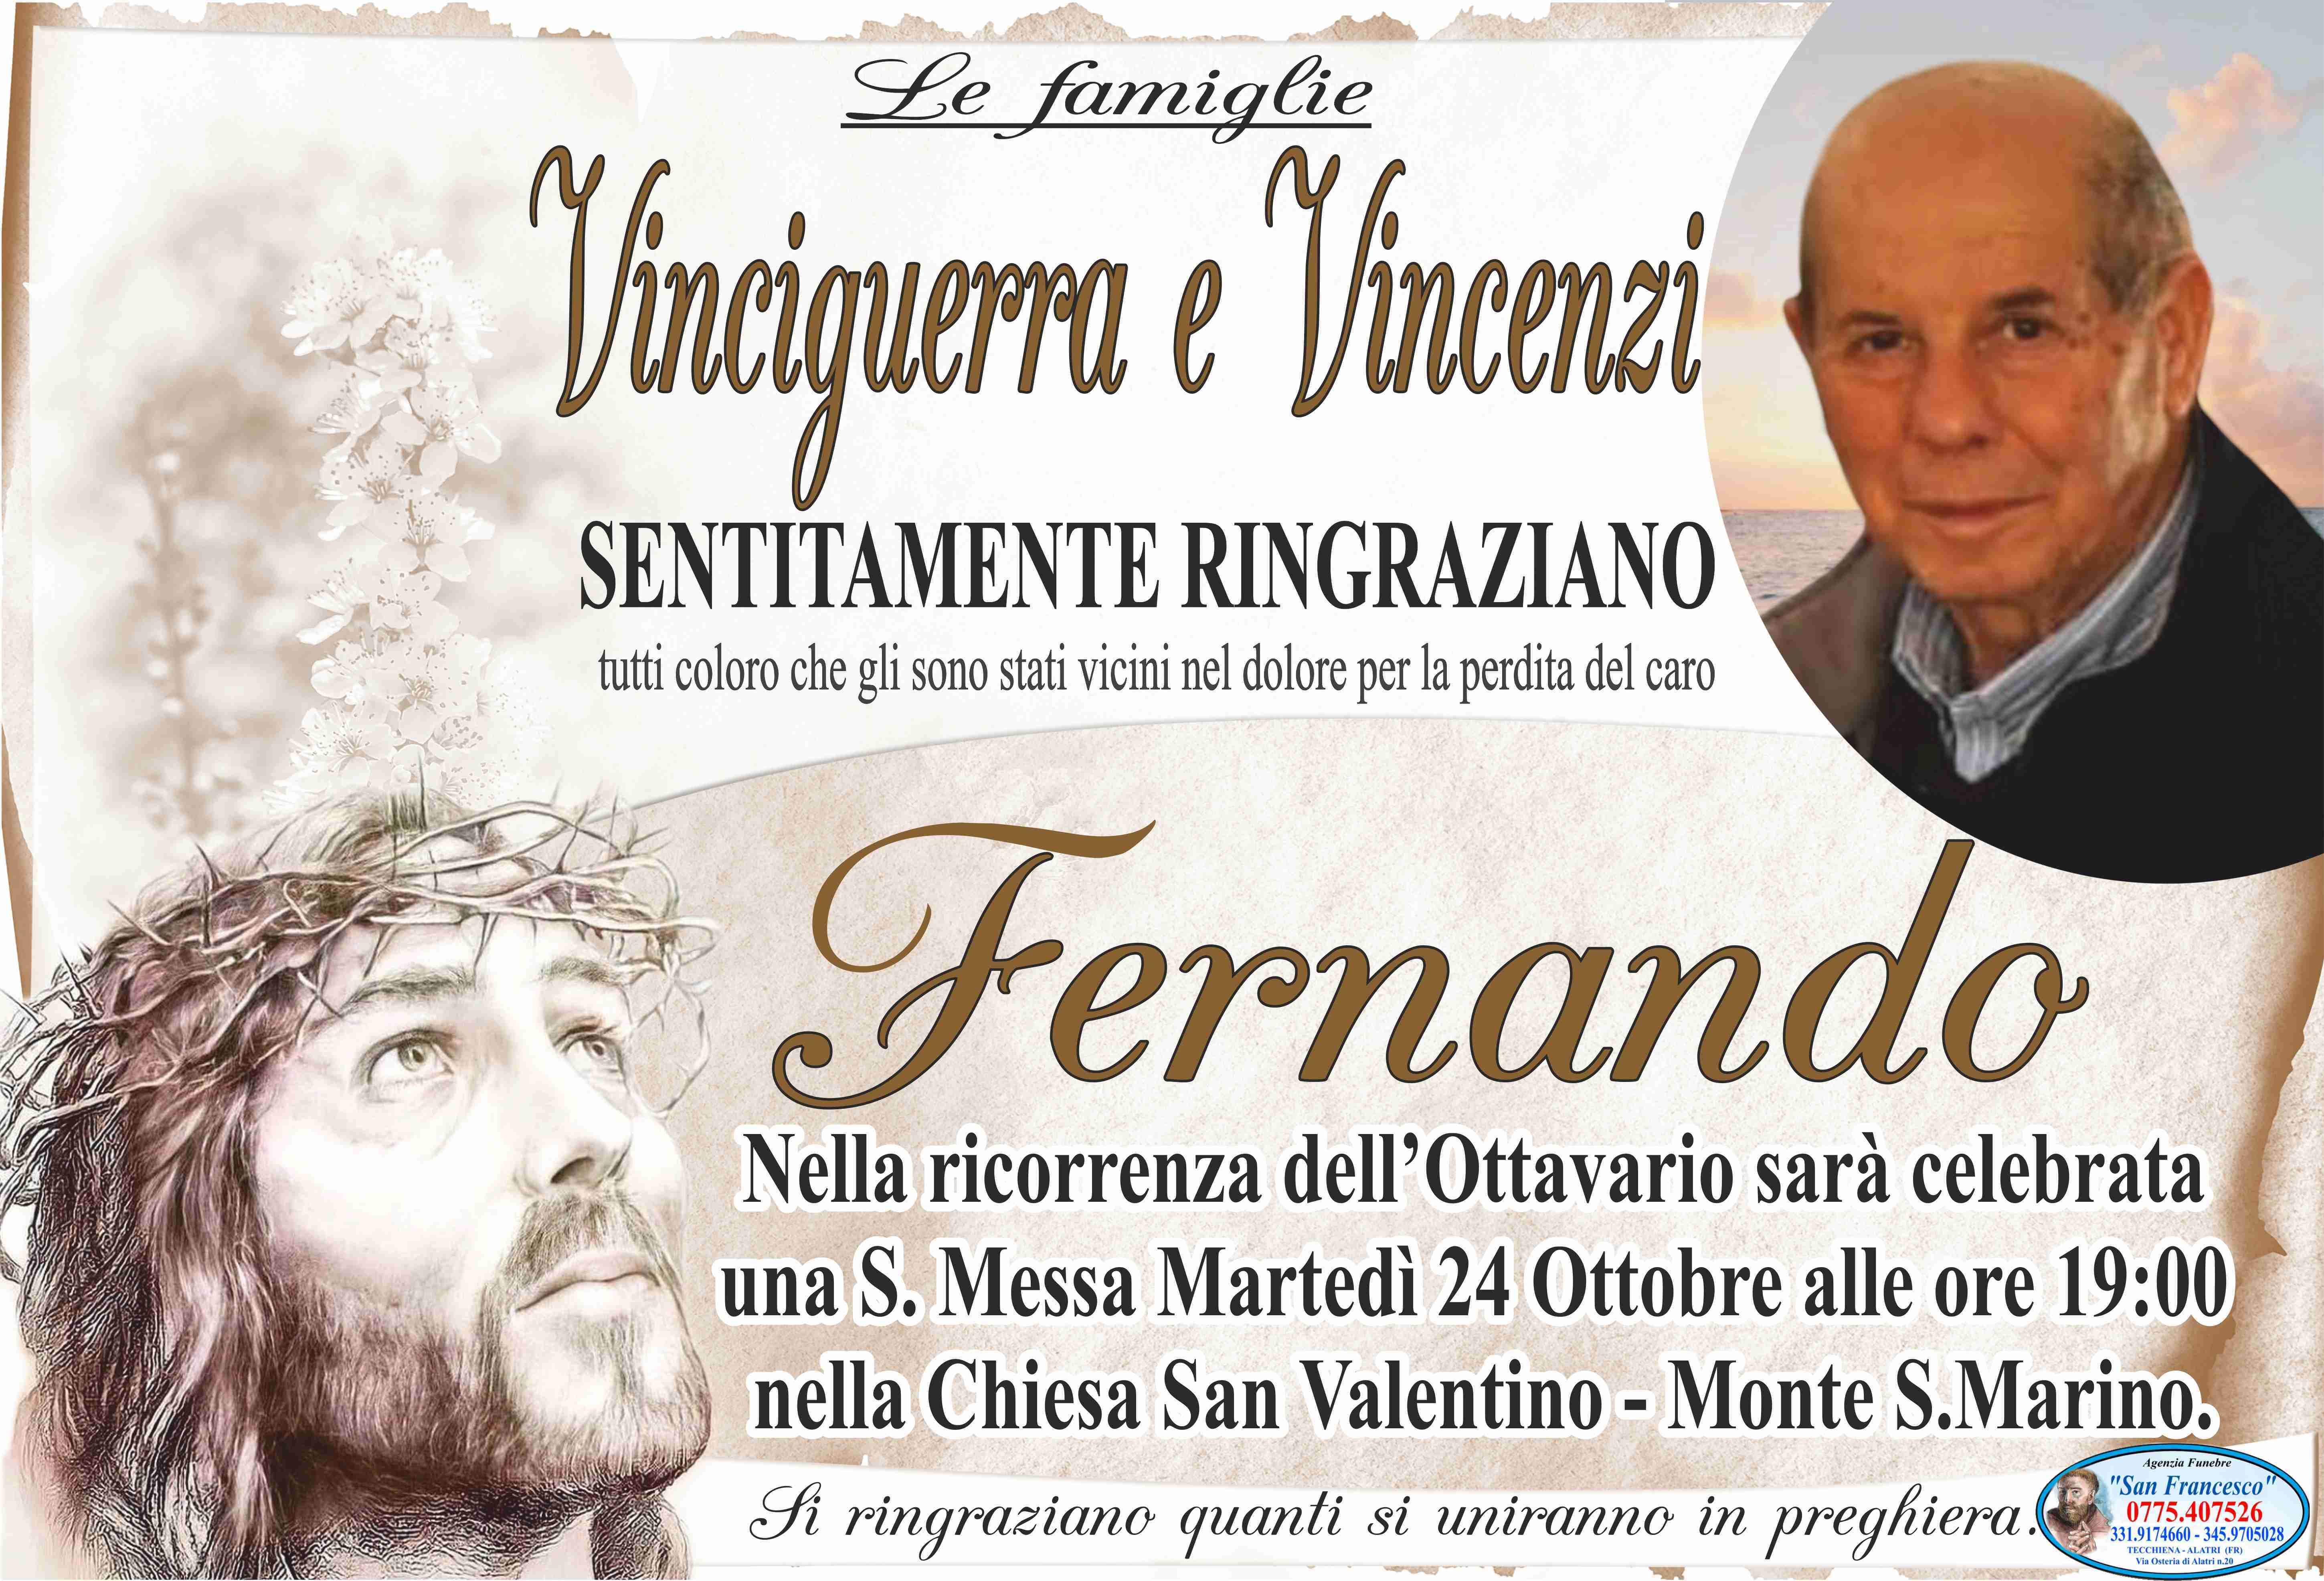 Fernando Vinciguerra